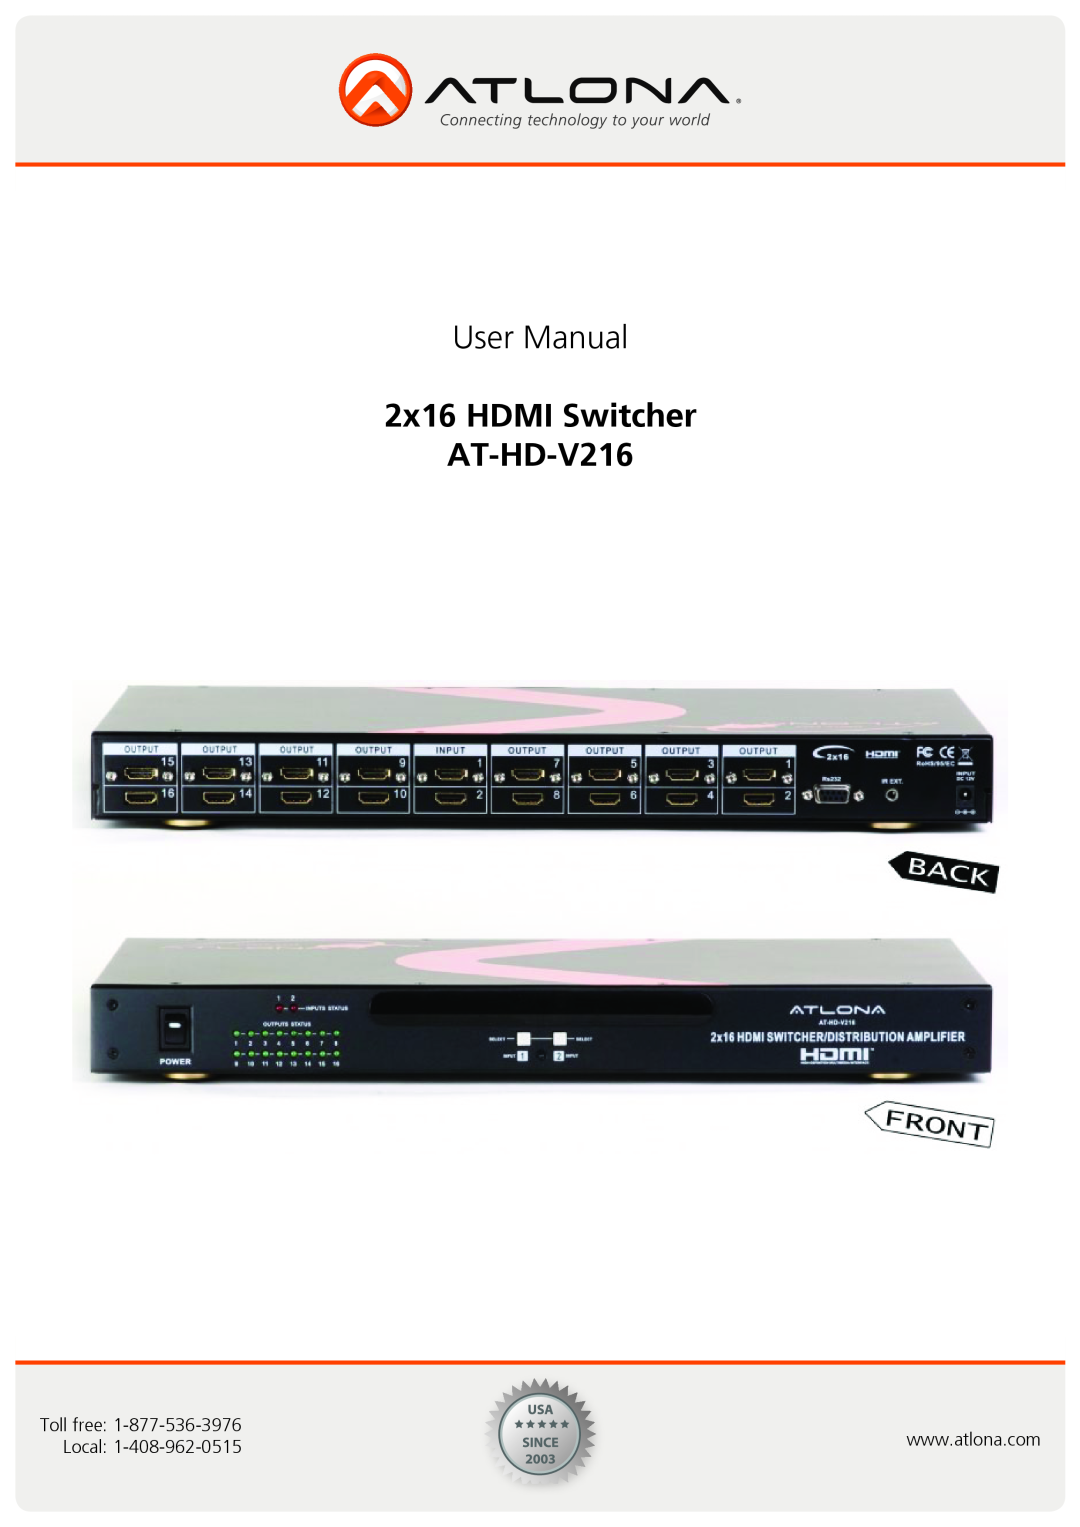 Atlona user manual 2x16 HDMI Switcher AT-HD-V216 